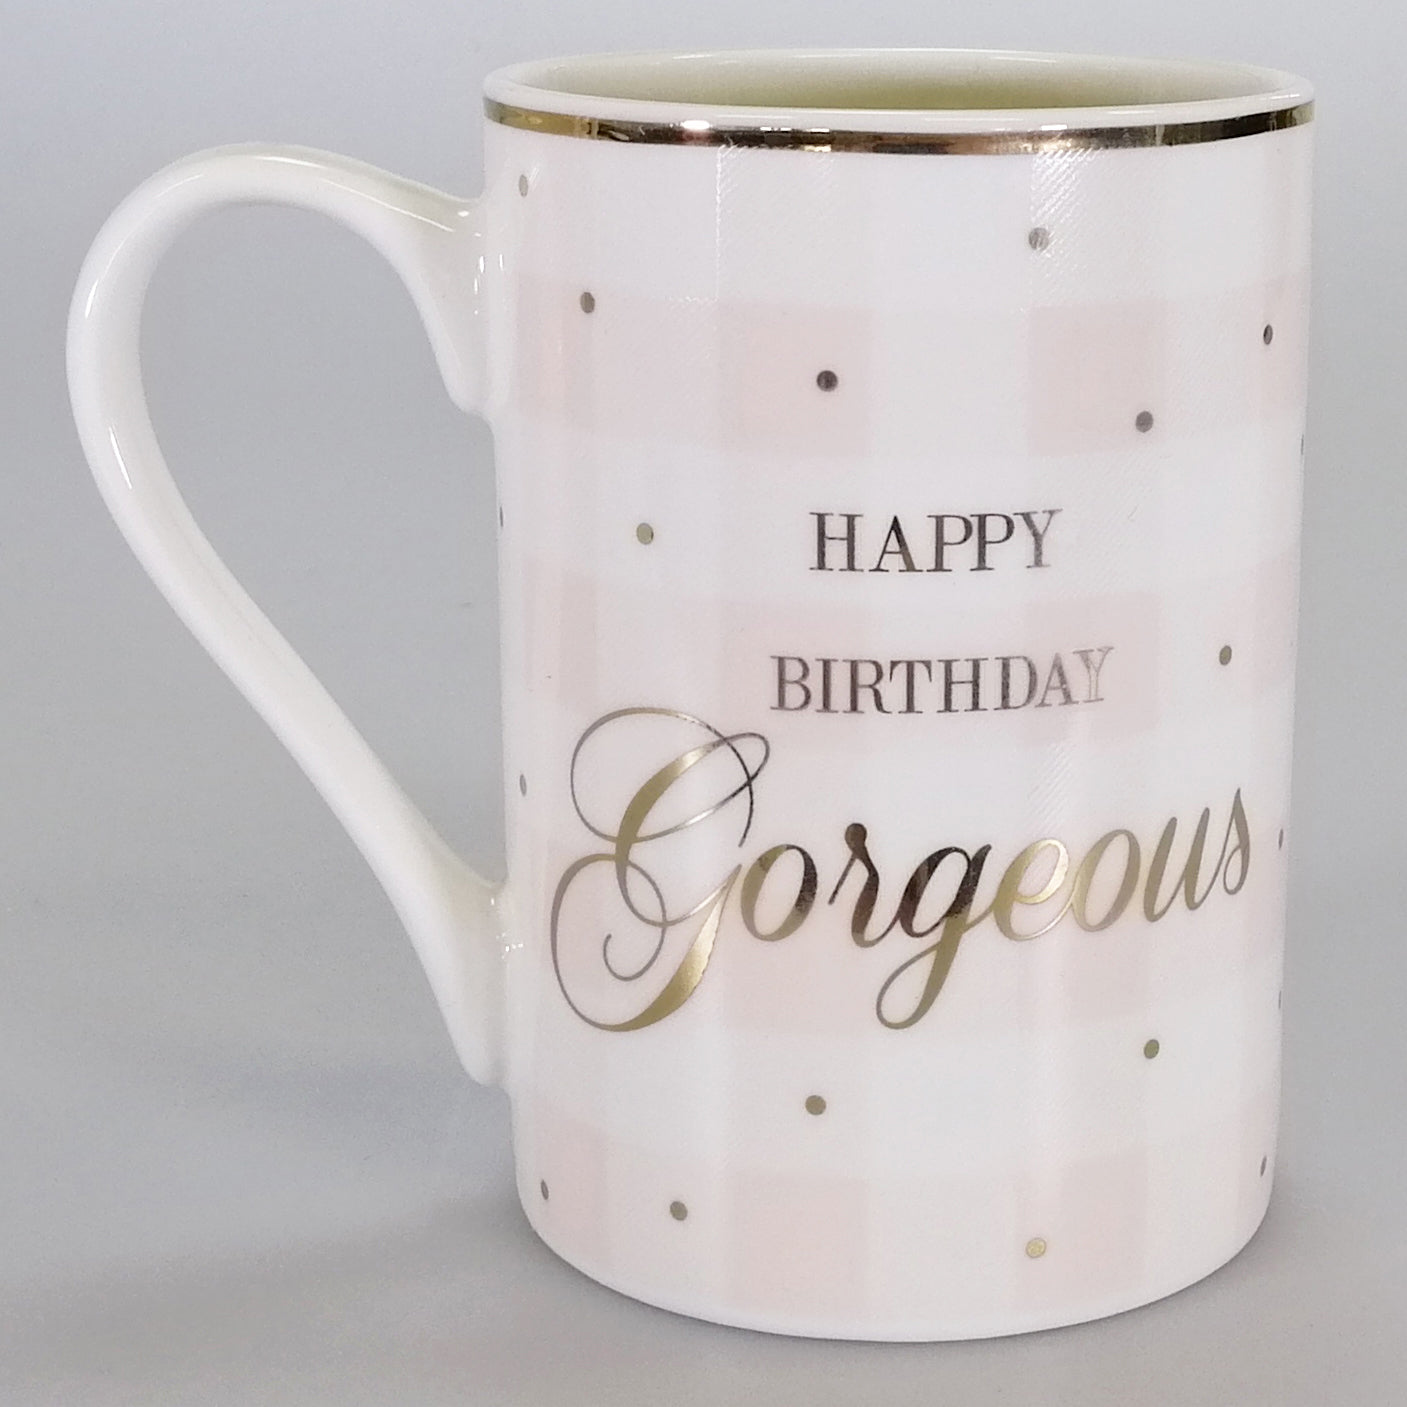 Happy Birthday Gorgeous' Mug